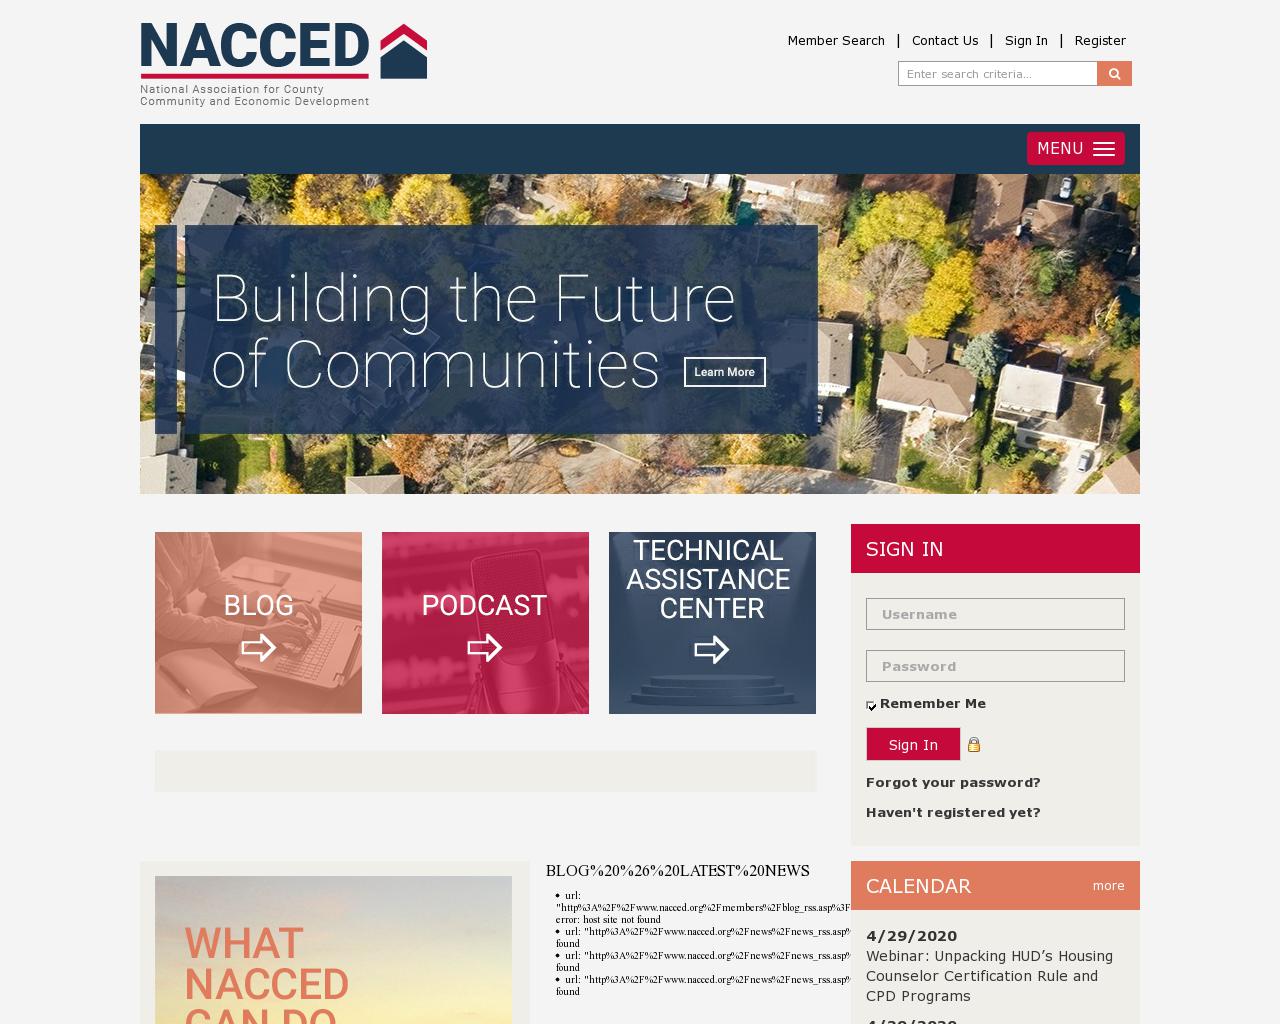 nacced.org